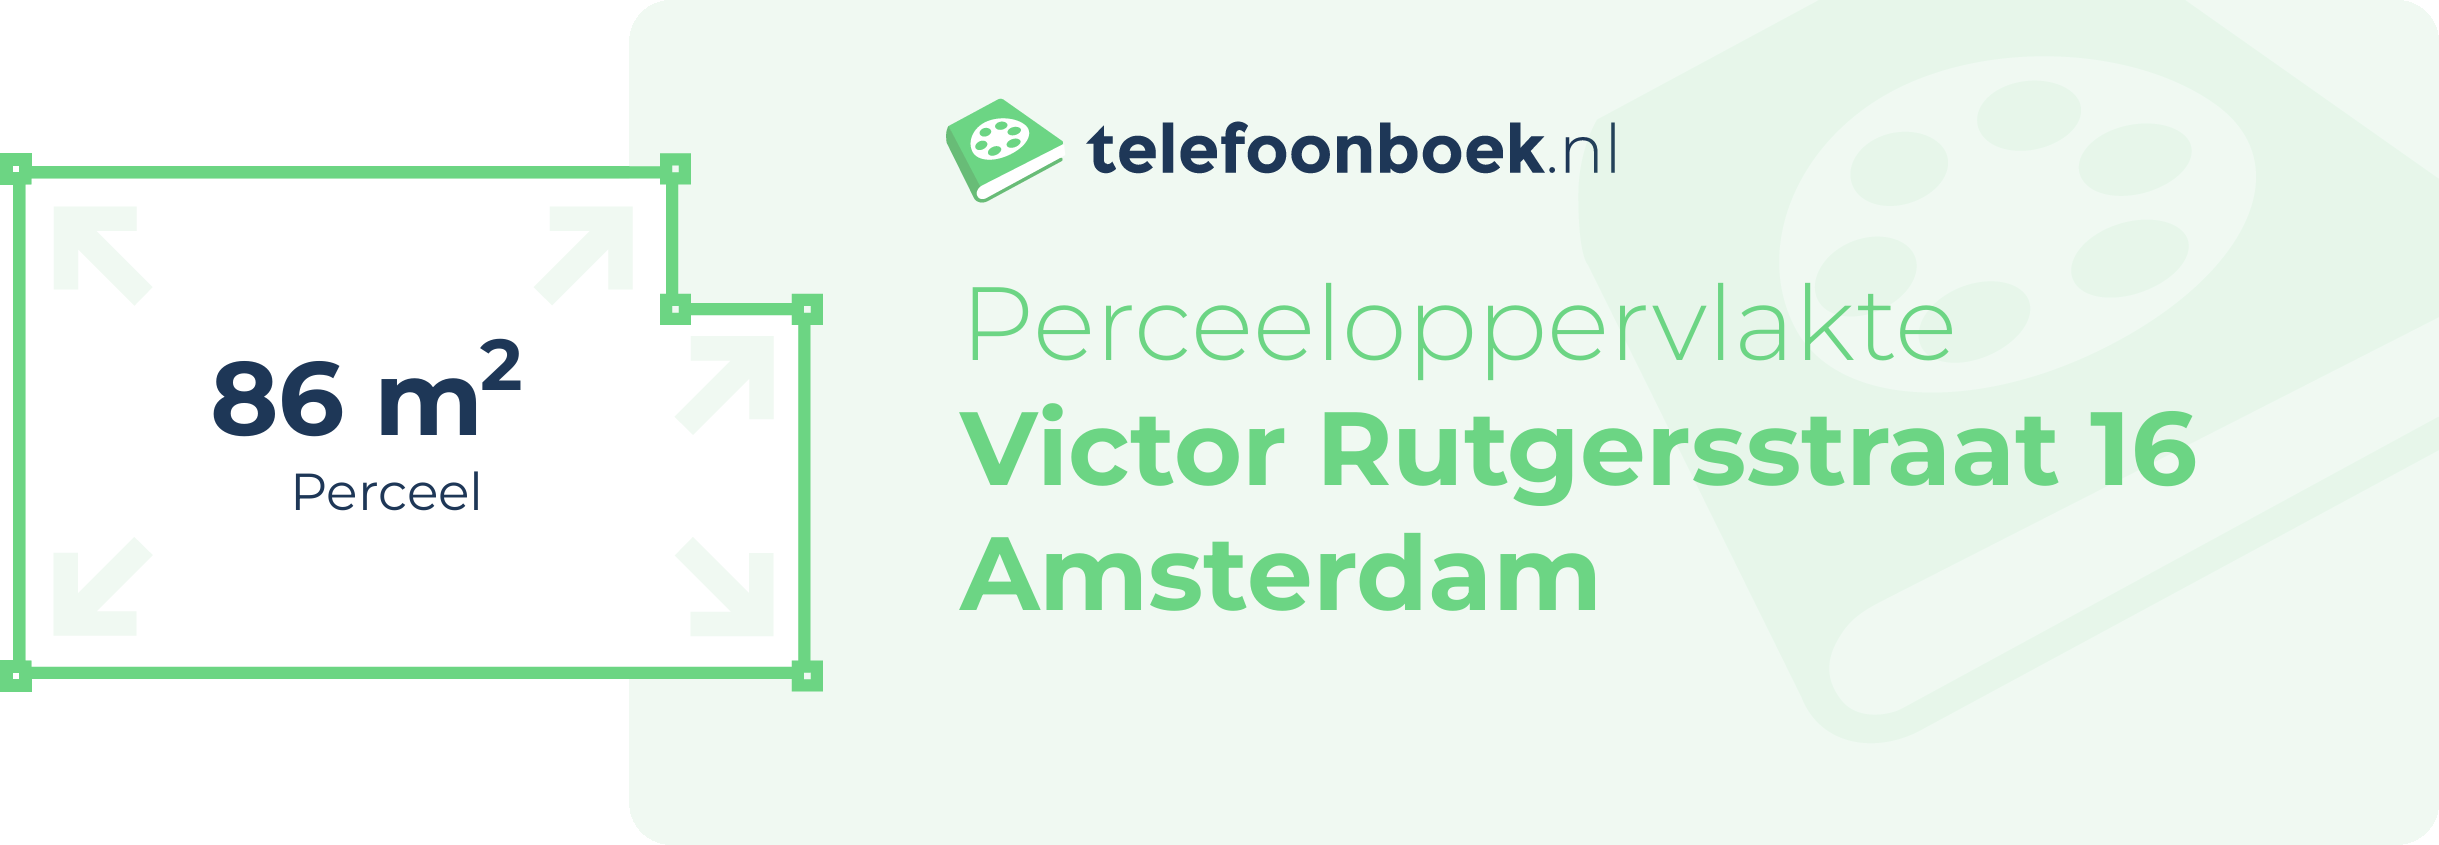 Perceeloppervlakte Victor Rutgersstraat 16 Amsterdam